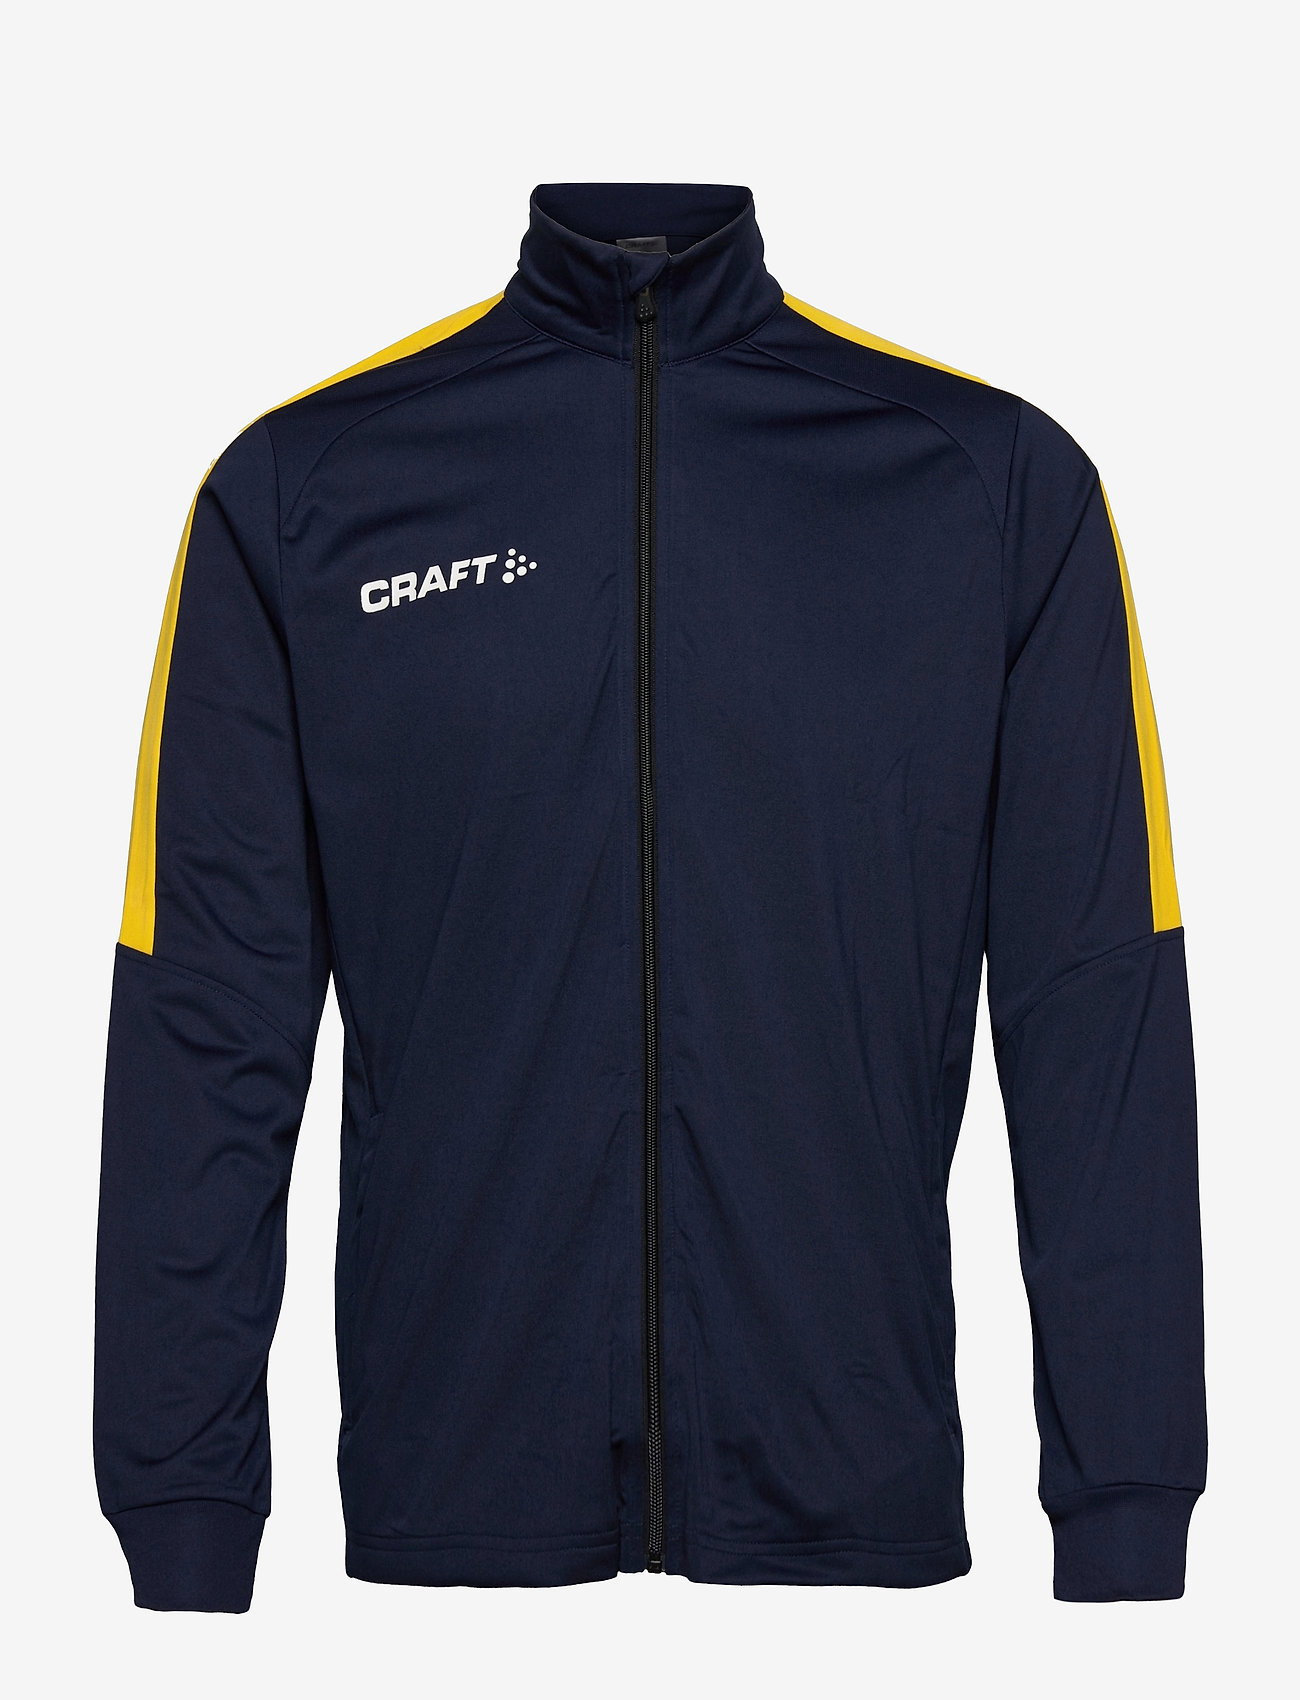 Craft - Progress Jacket M - mid layer jackets - navy/yellow - 0